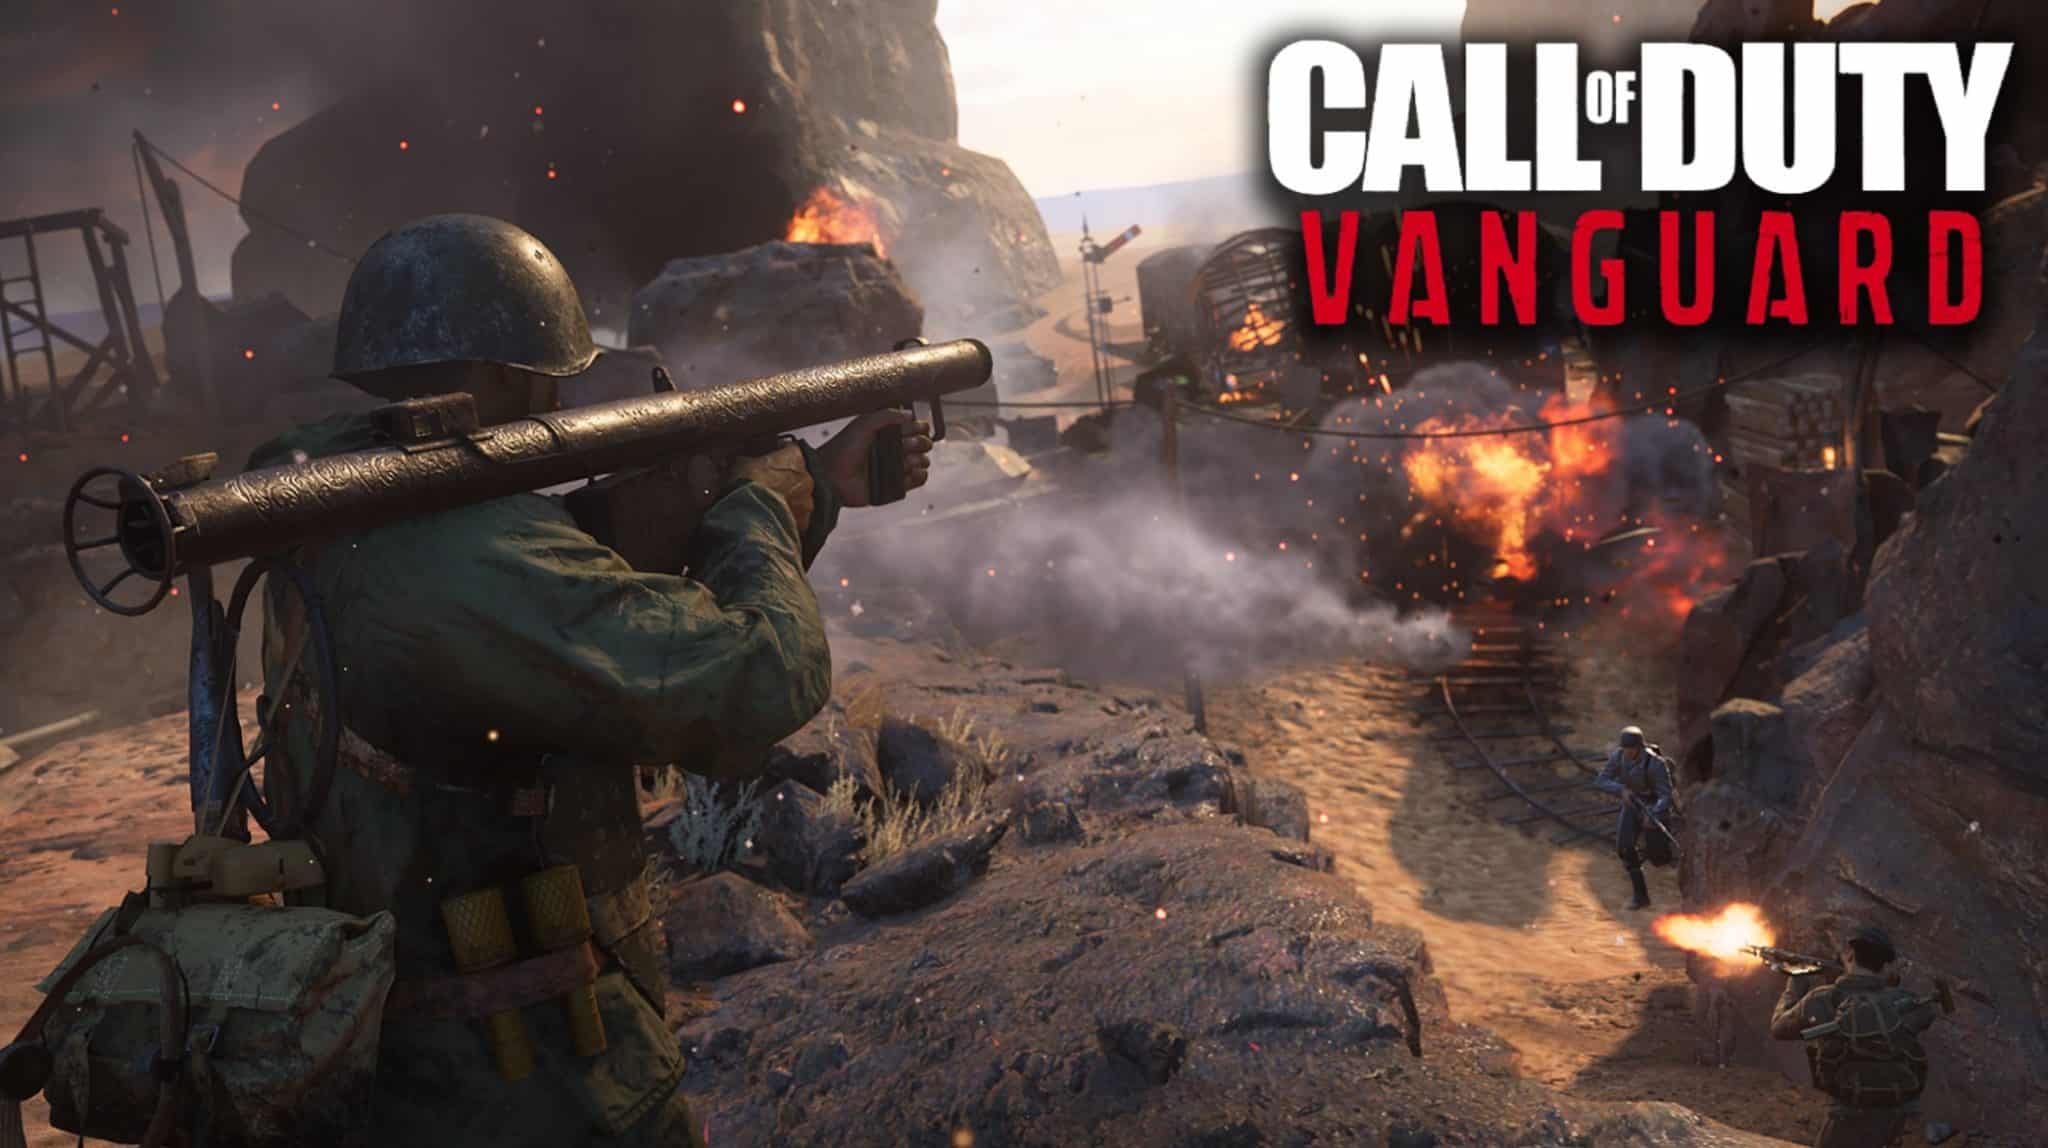 call of duty vanguard images leaked | leadergamer